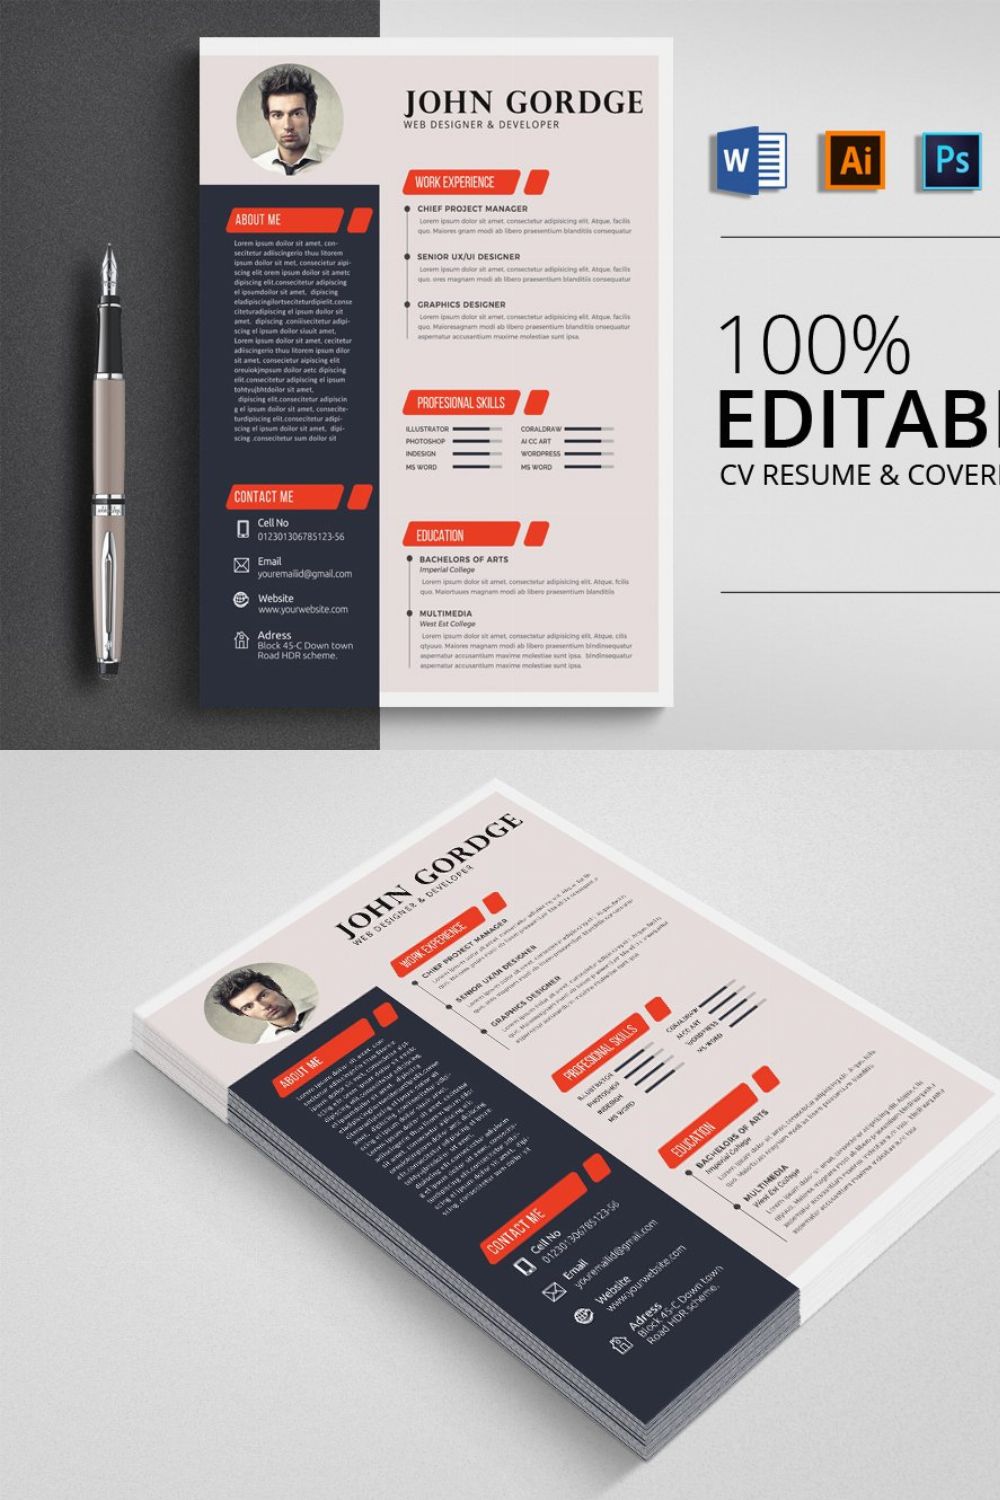 Job CV Resume Word Template pinterest preview image.